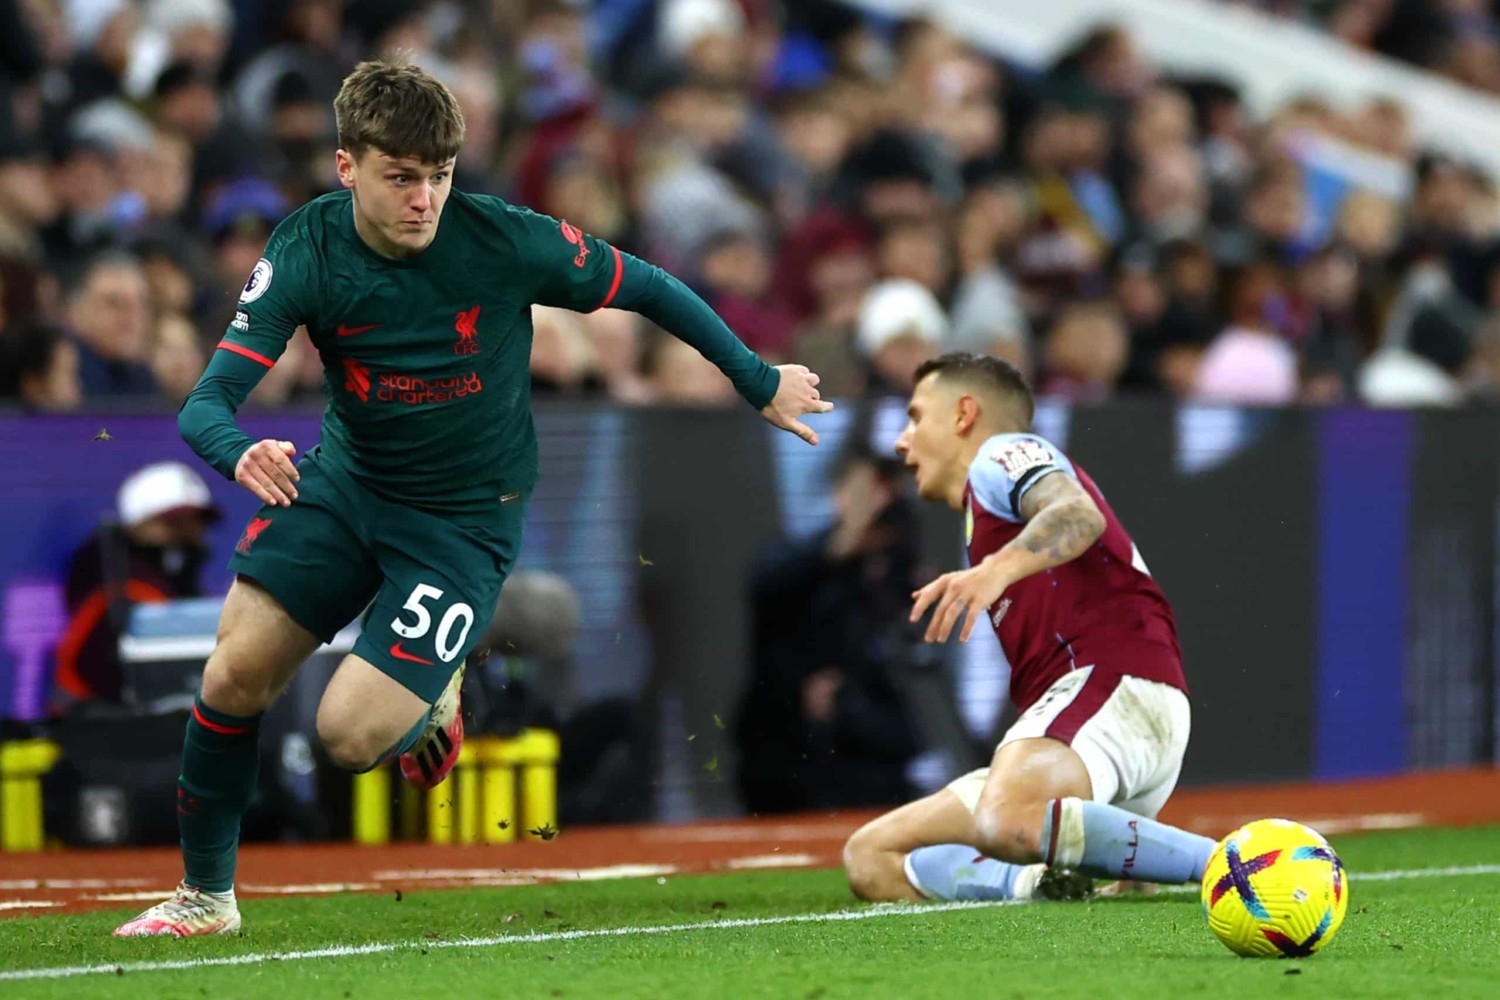 Liverpool attacker Ben Doak accelerates past Aston Villa defender